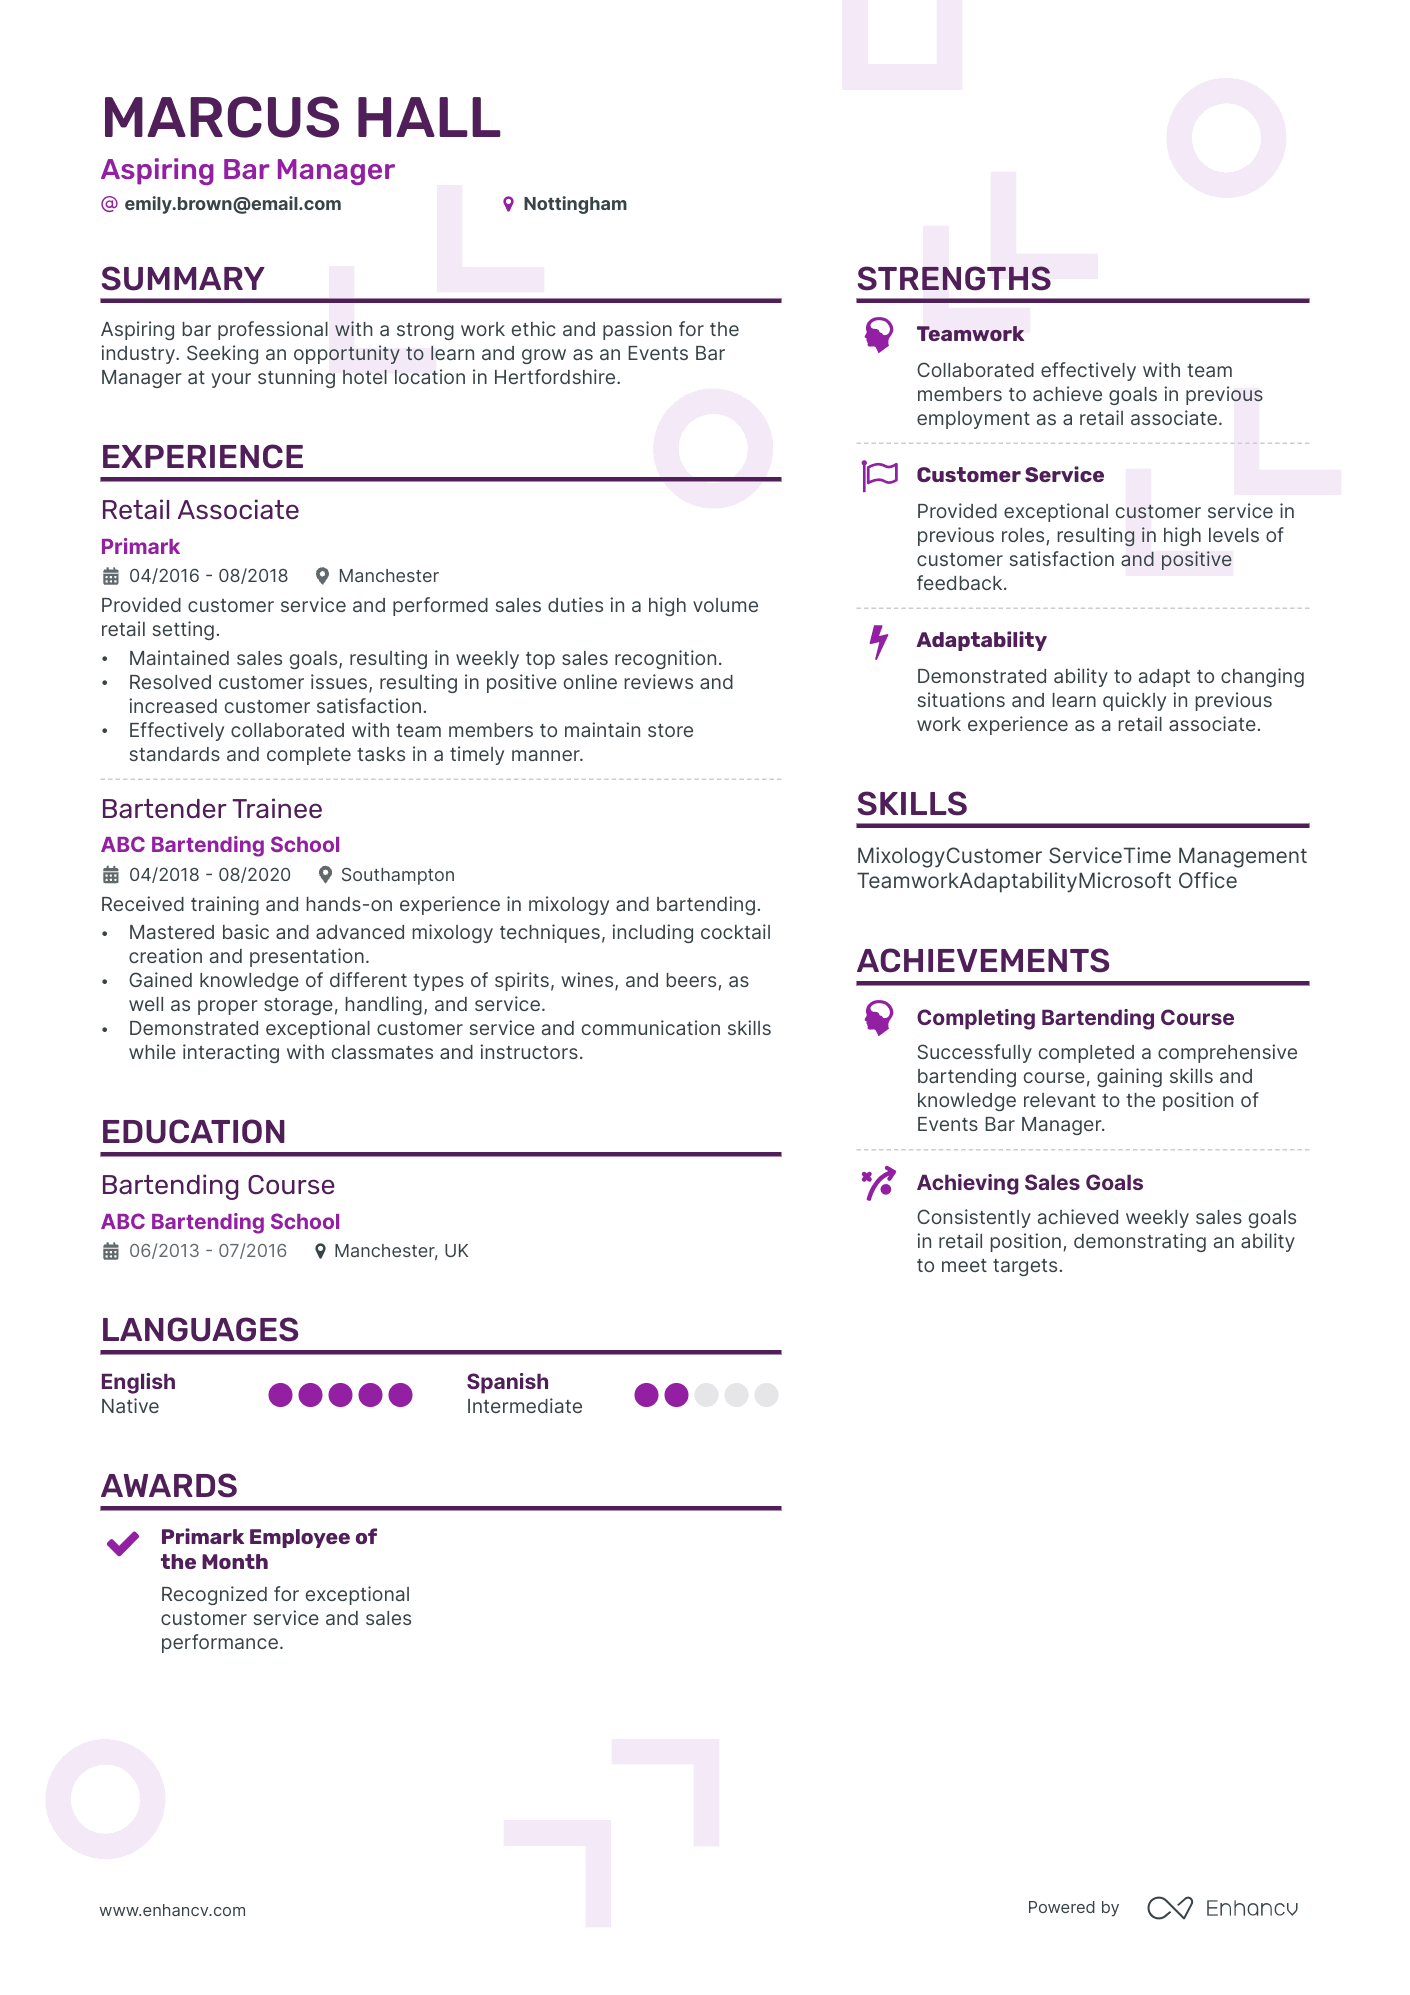 Aspiring Bar Manager CV example